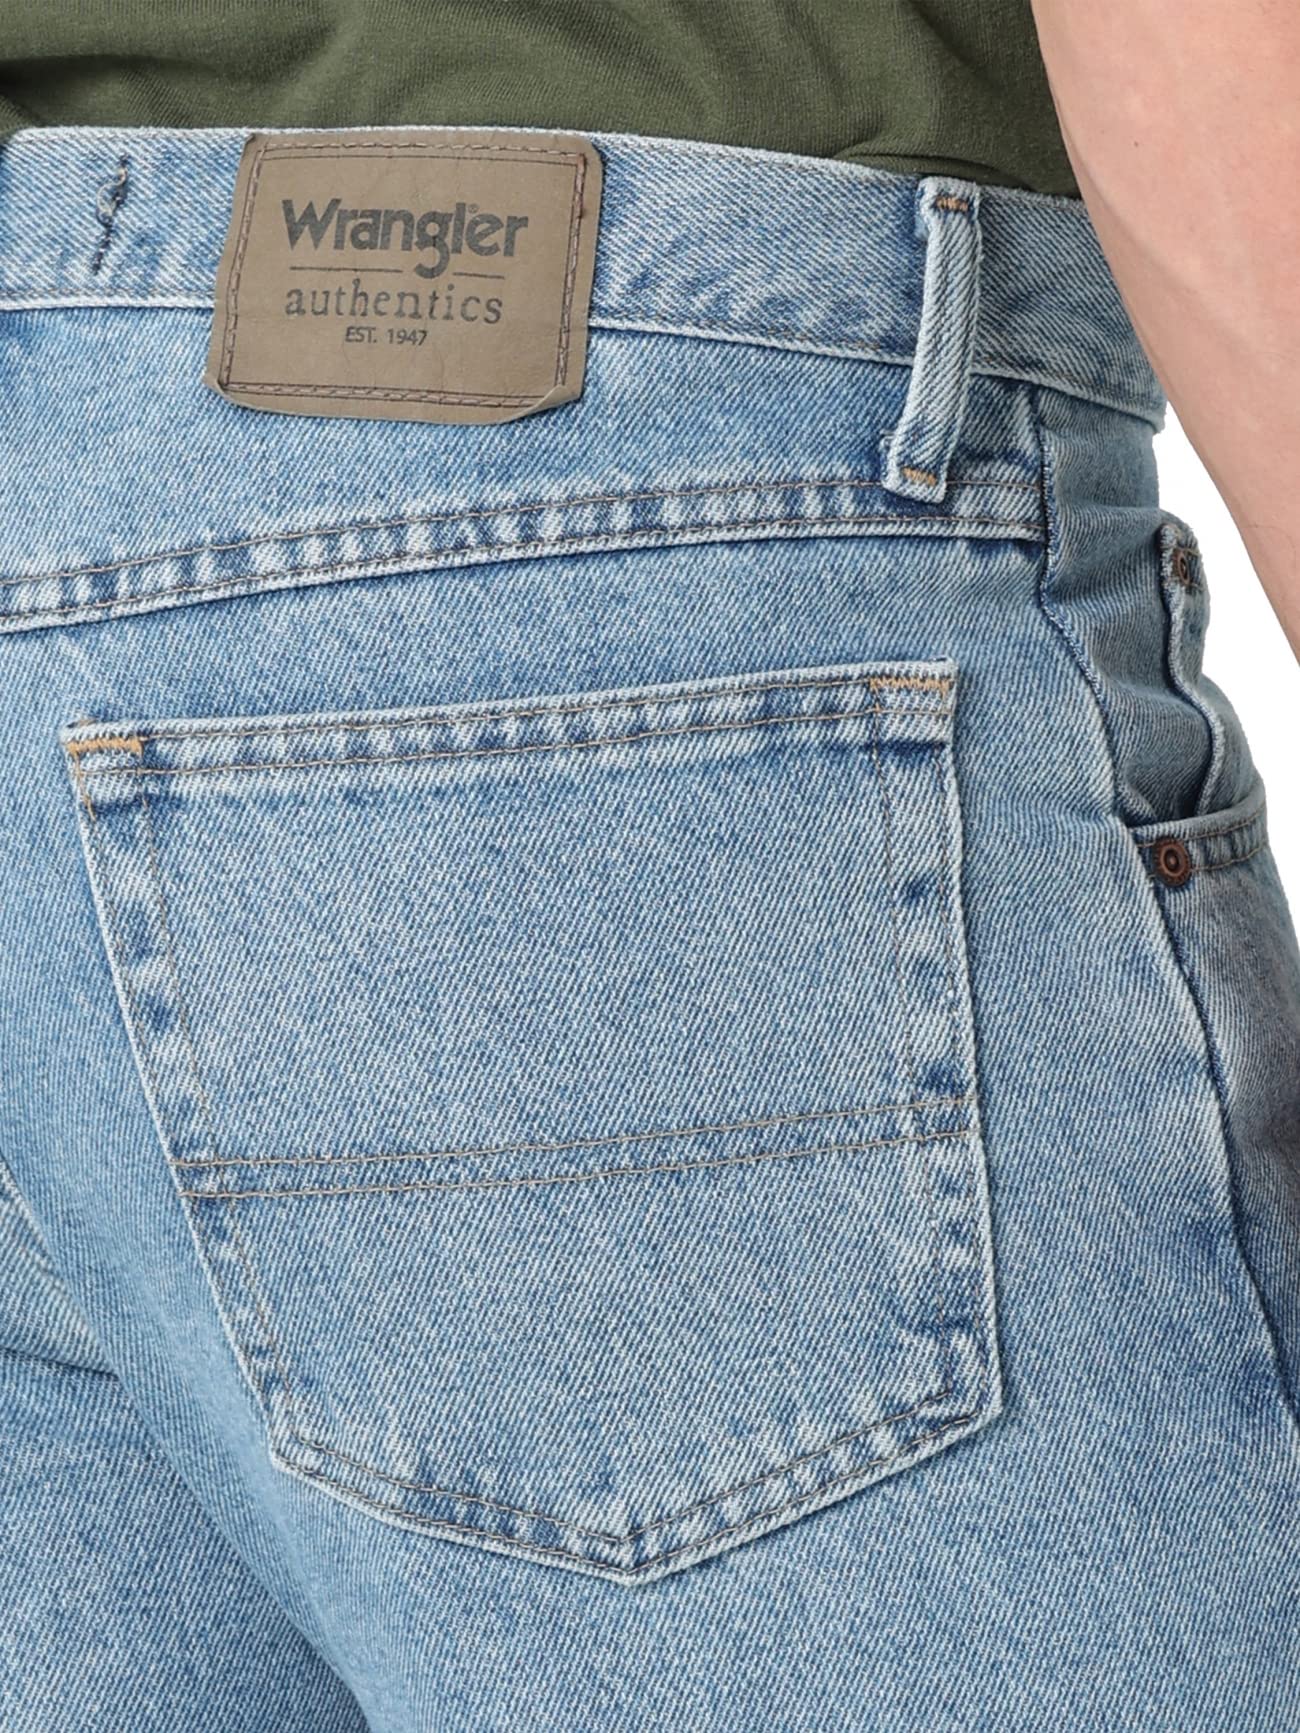 Wrangler Authentics Men's Classic 5-Pocket Regular Fit Cotton Jean, Light Stonewash, 36W x 28L